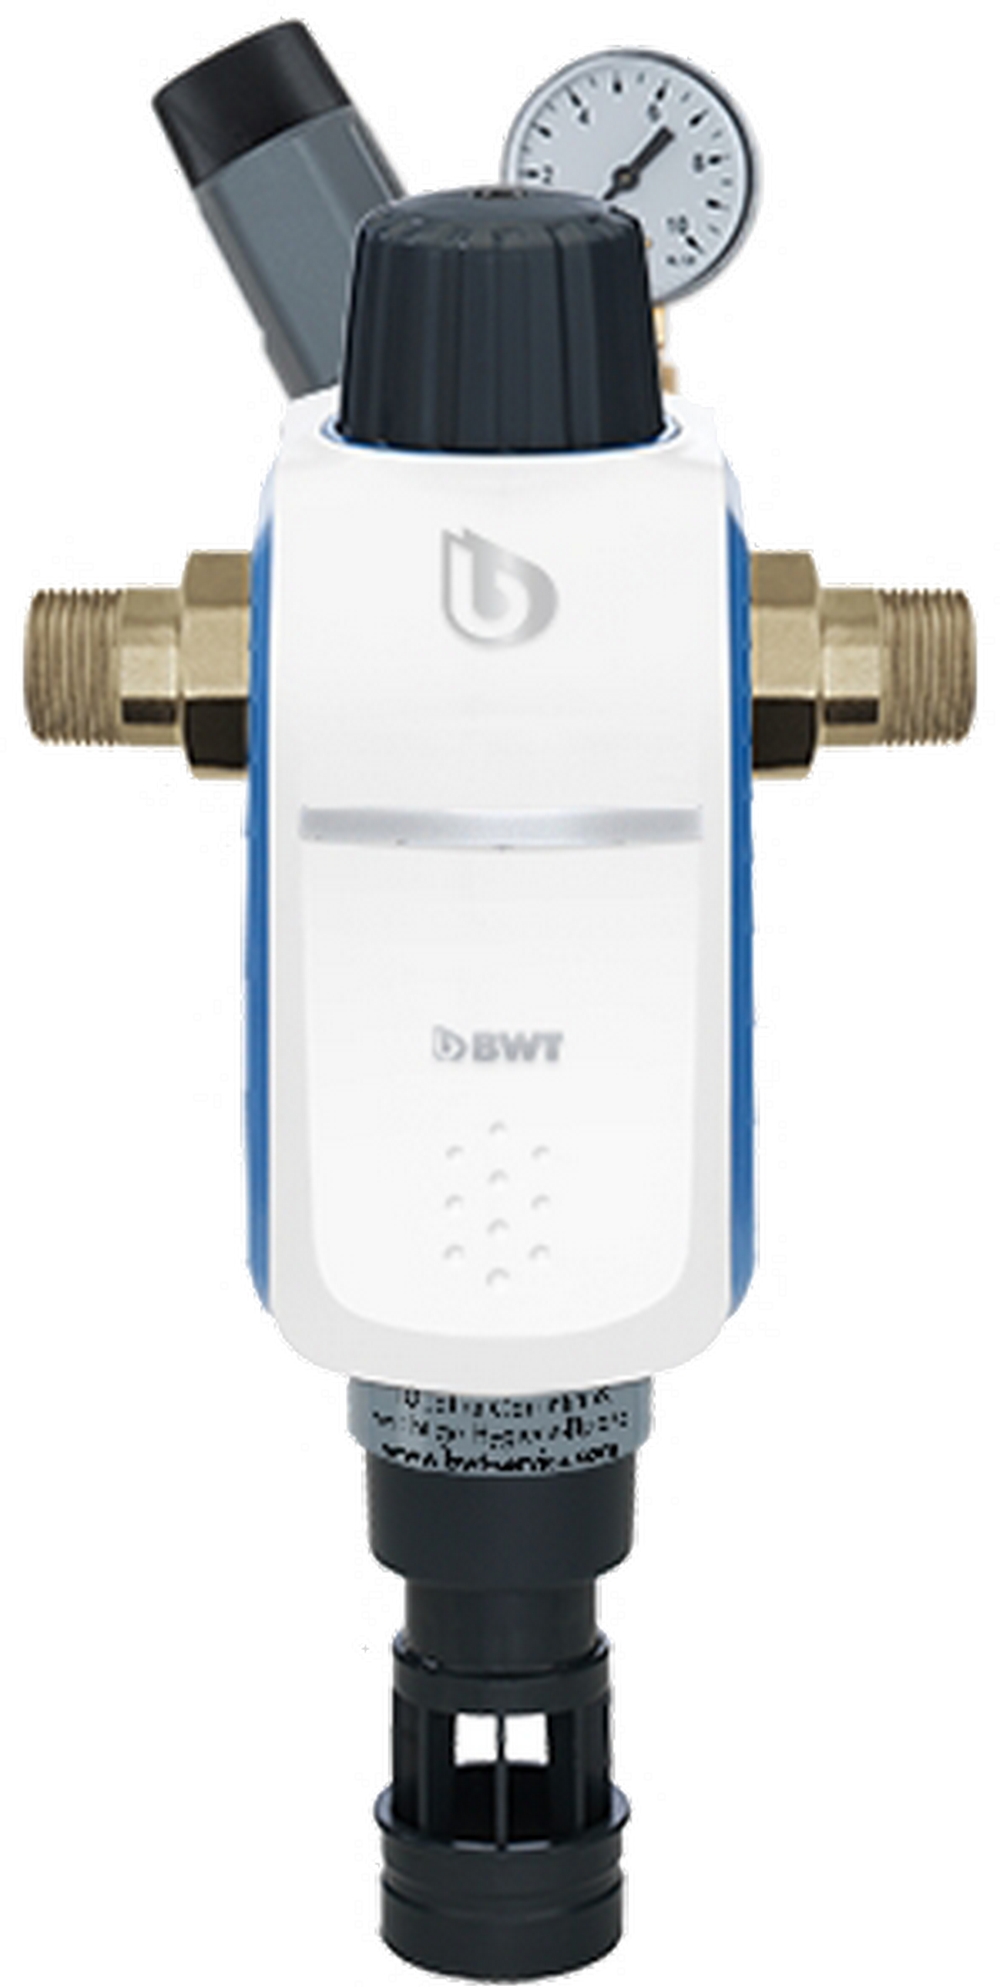 Фільтр BWT R1 HWS 3/4" с редуктором давления 840369